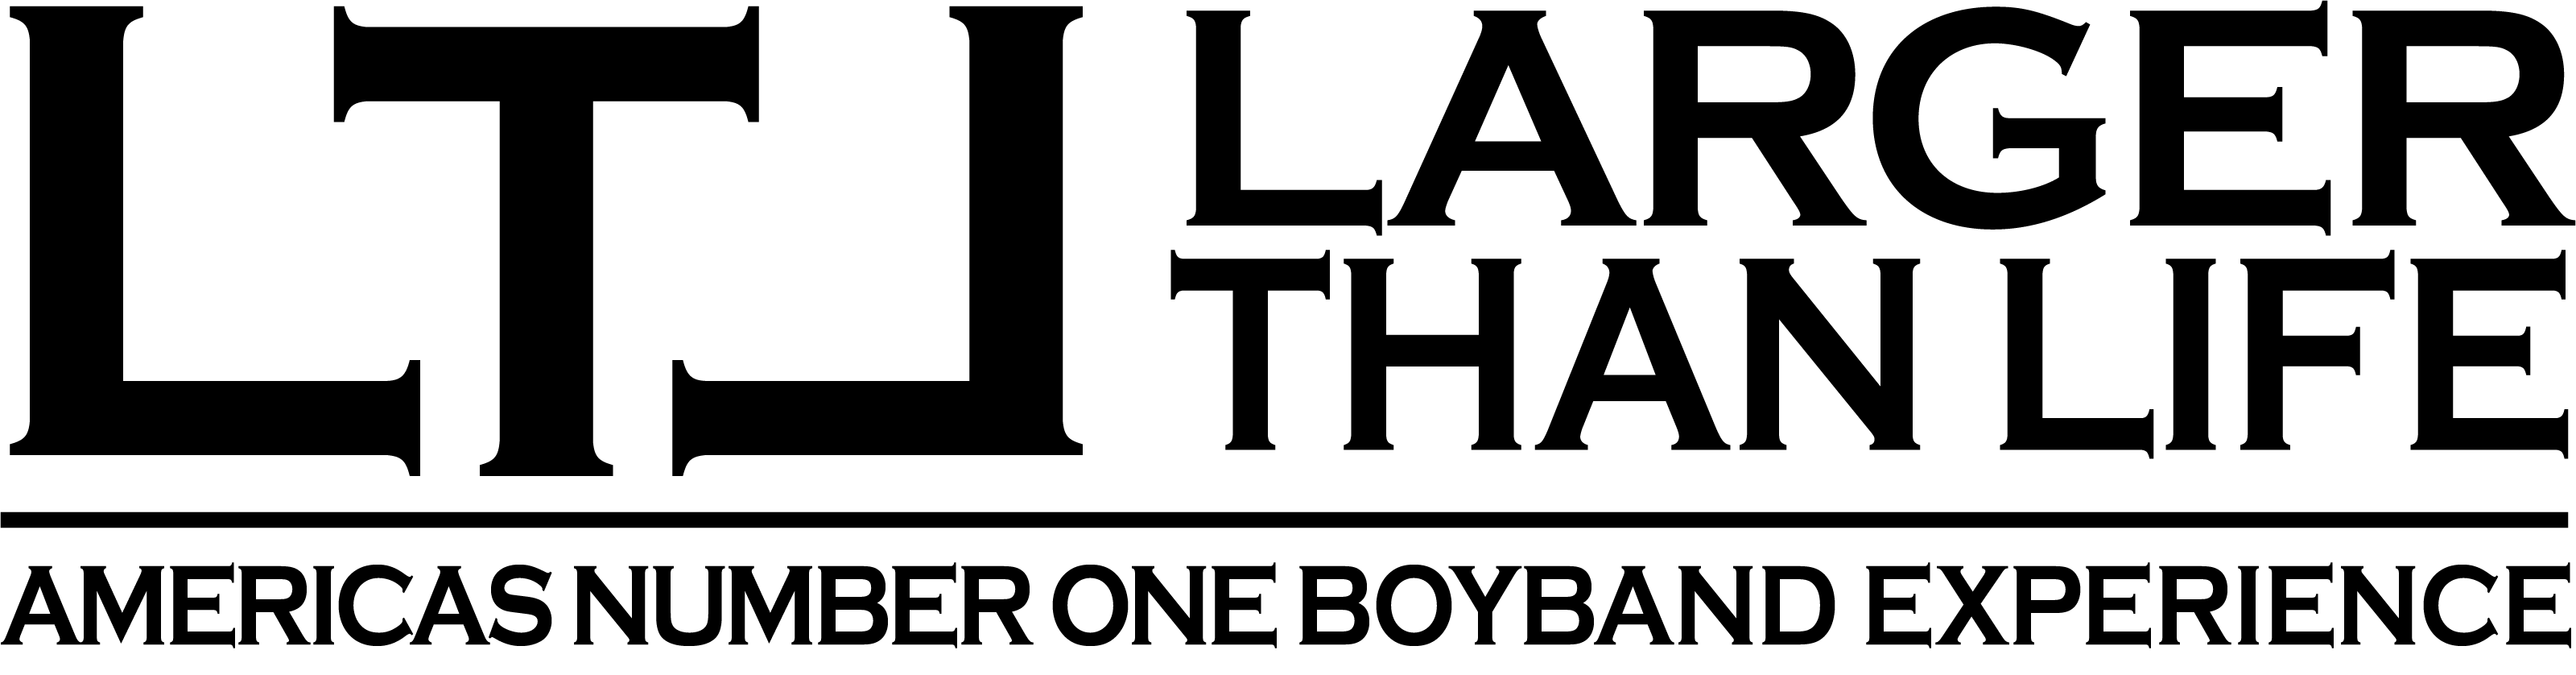 LTL-logo-02-black